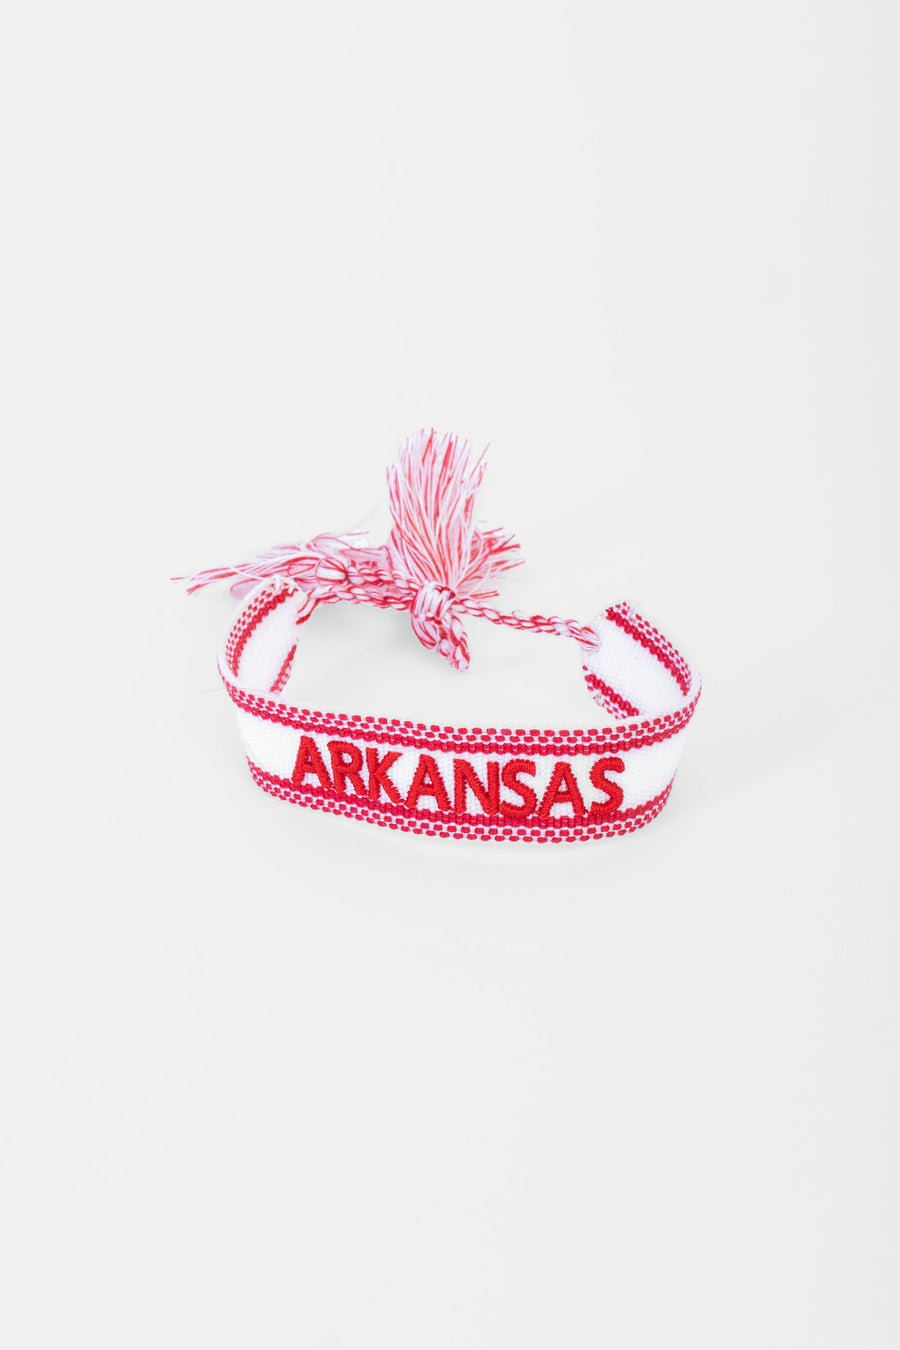 Arkansas Woven Bracelet *Limited*Edition*